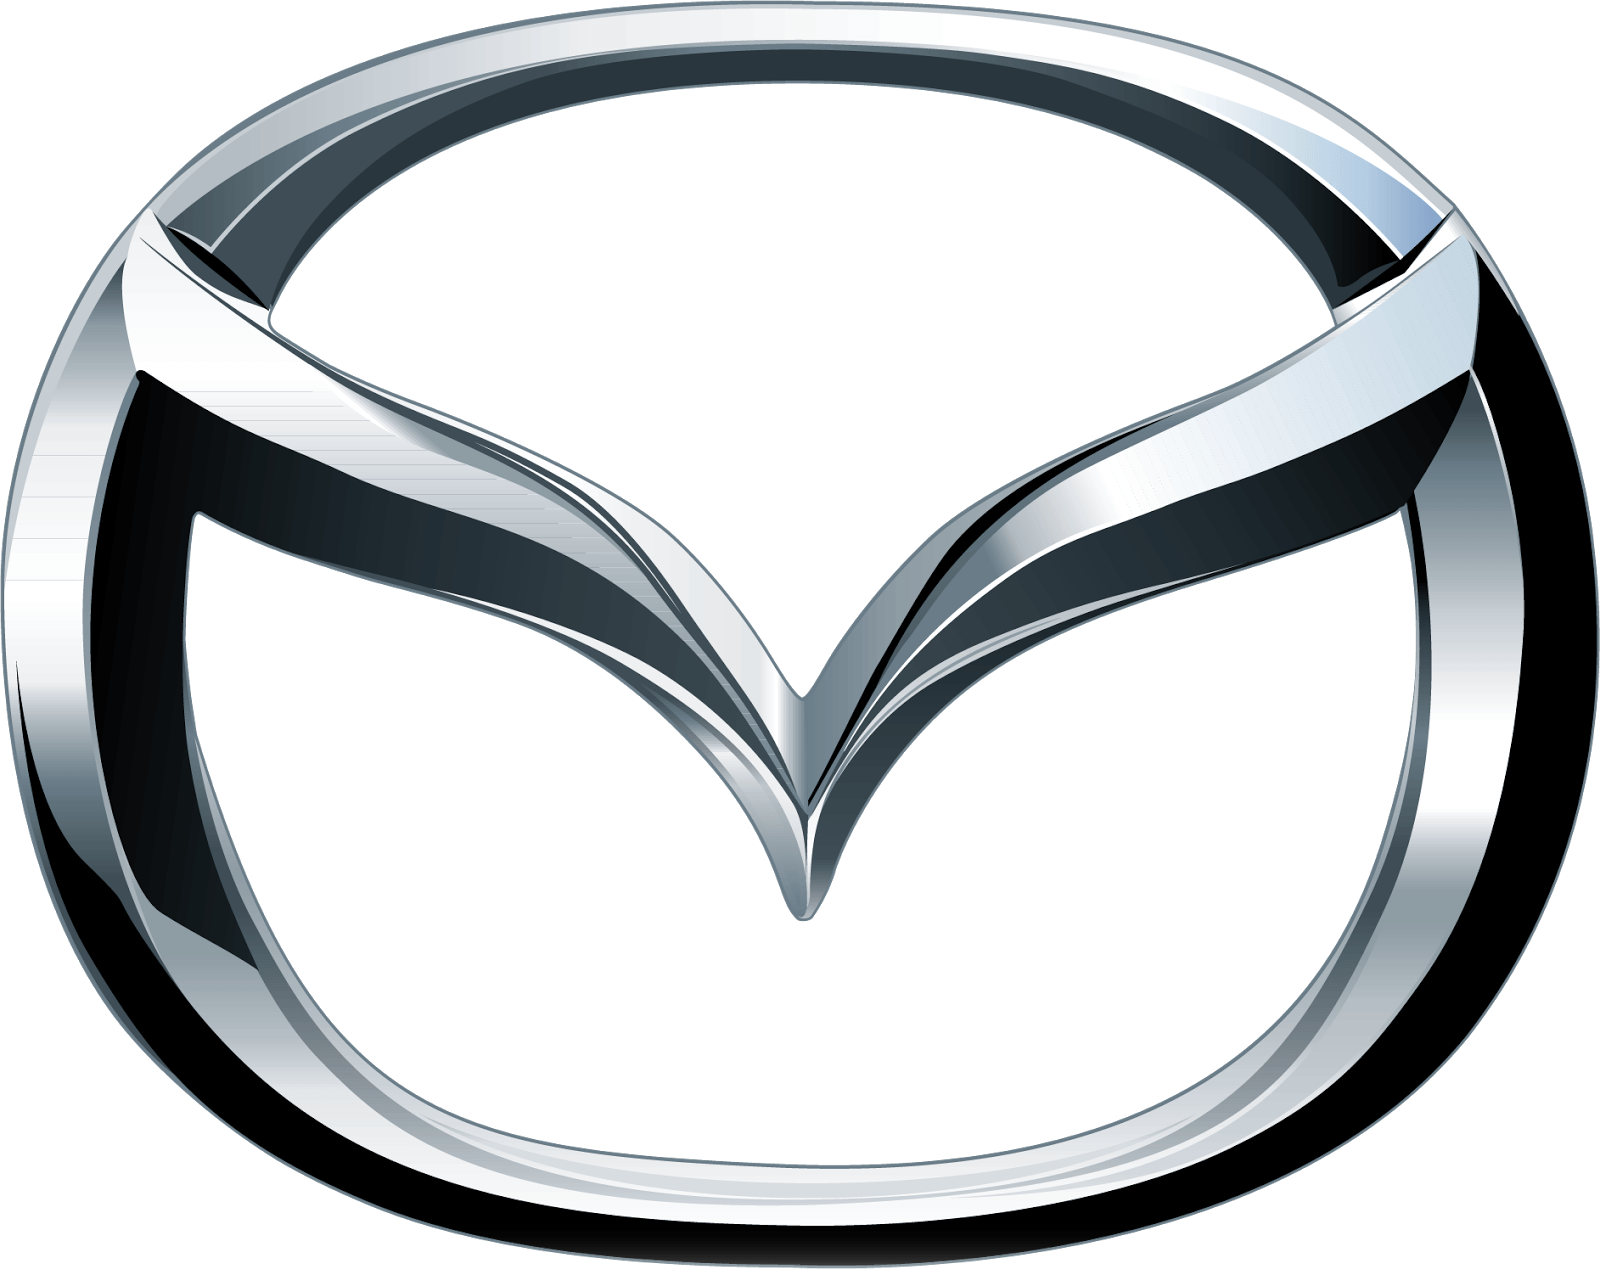 1960 Mazda Logo - Mazda Logo, Mazda Car Symbol Meaning and History | Car Brand Names.com